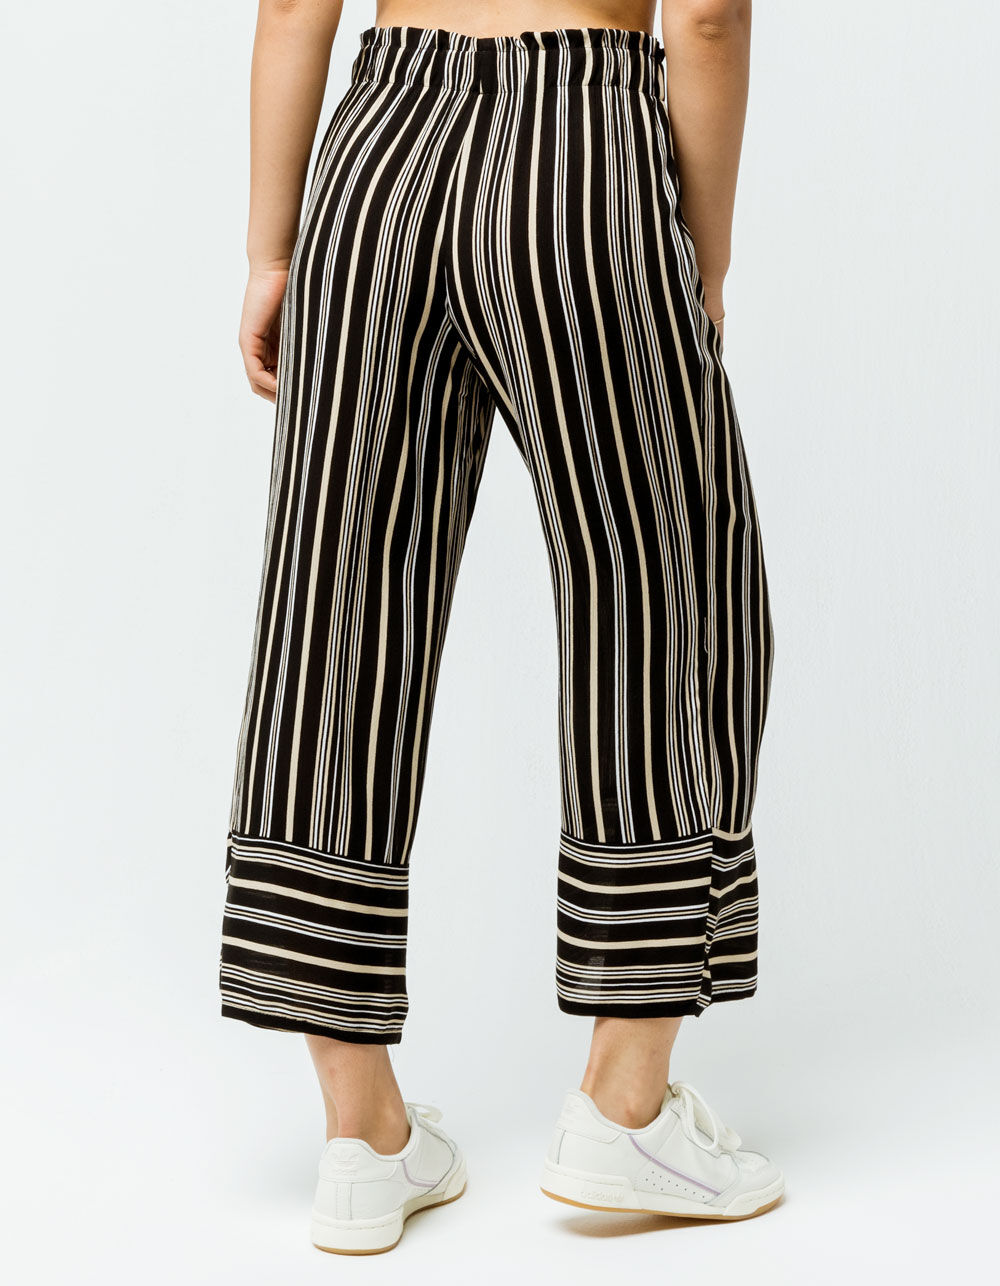 SKY AND SPARROW Stripe Crop Womens Wide Leg Pants - BLACK/MULTI | Tillys